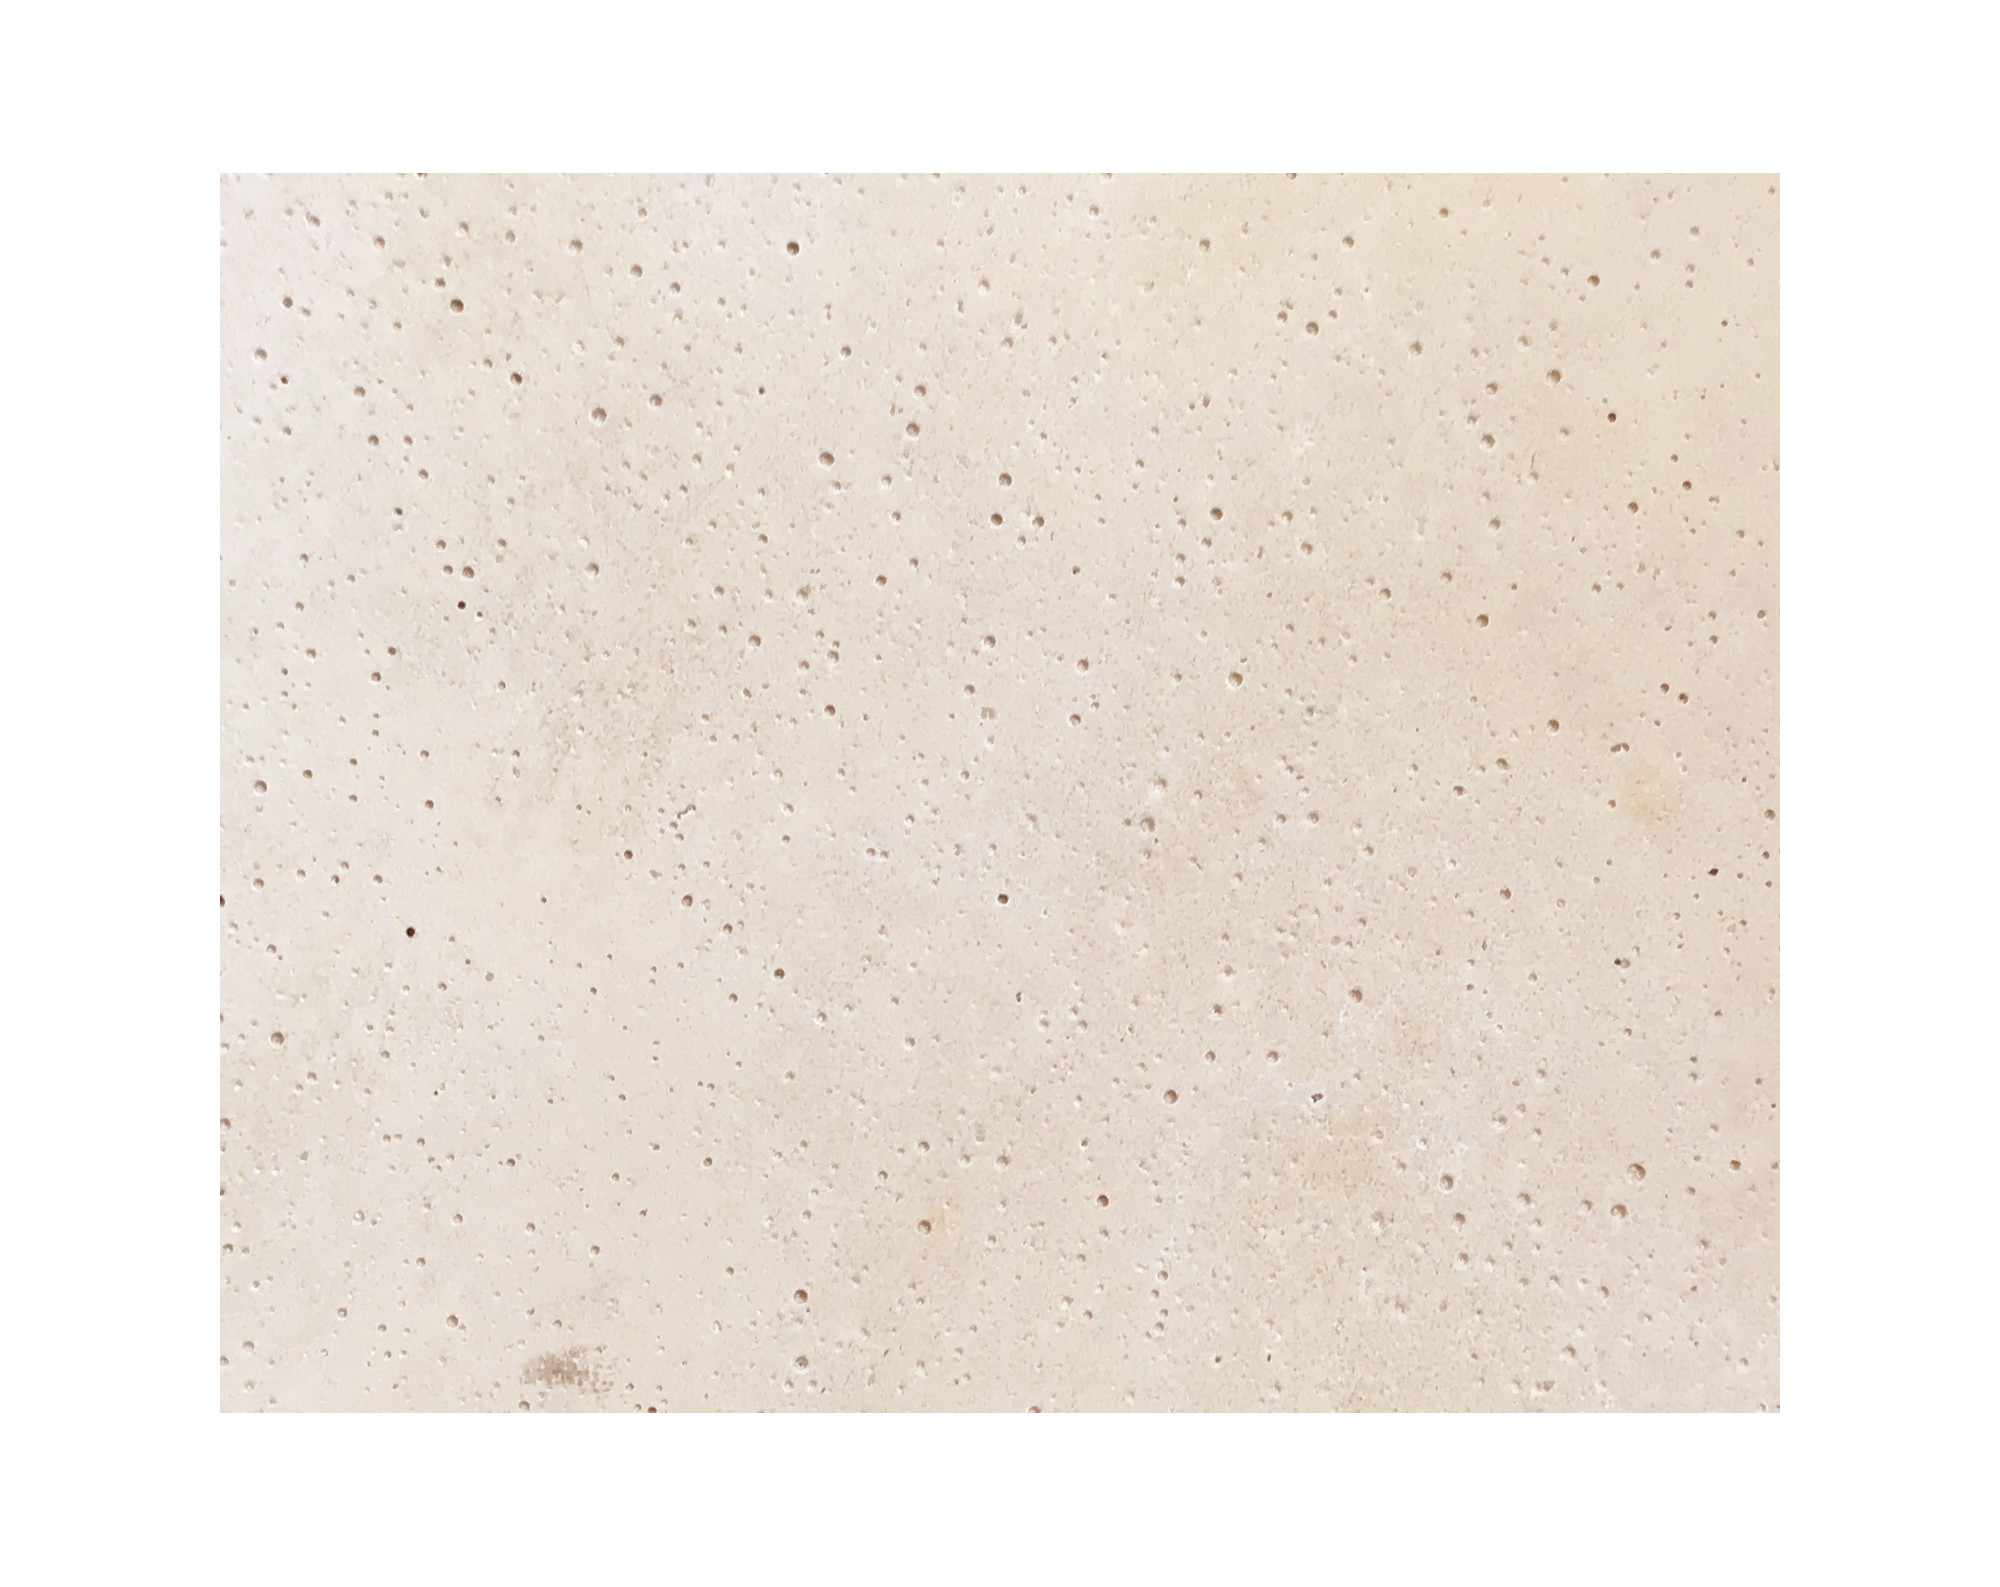 Harmo roc spartaset, olympia-serie, ovaal d: 4,20mx8,20m, indisch beige, beton